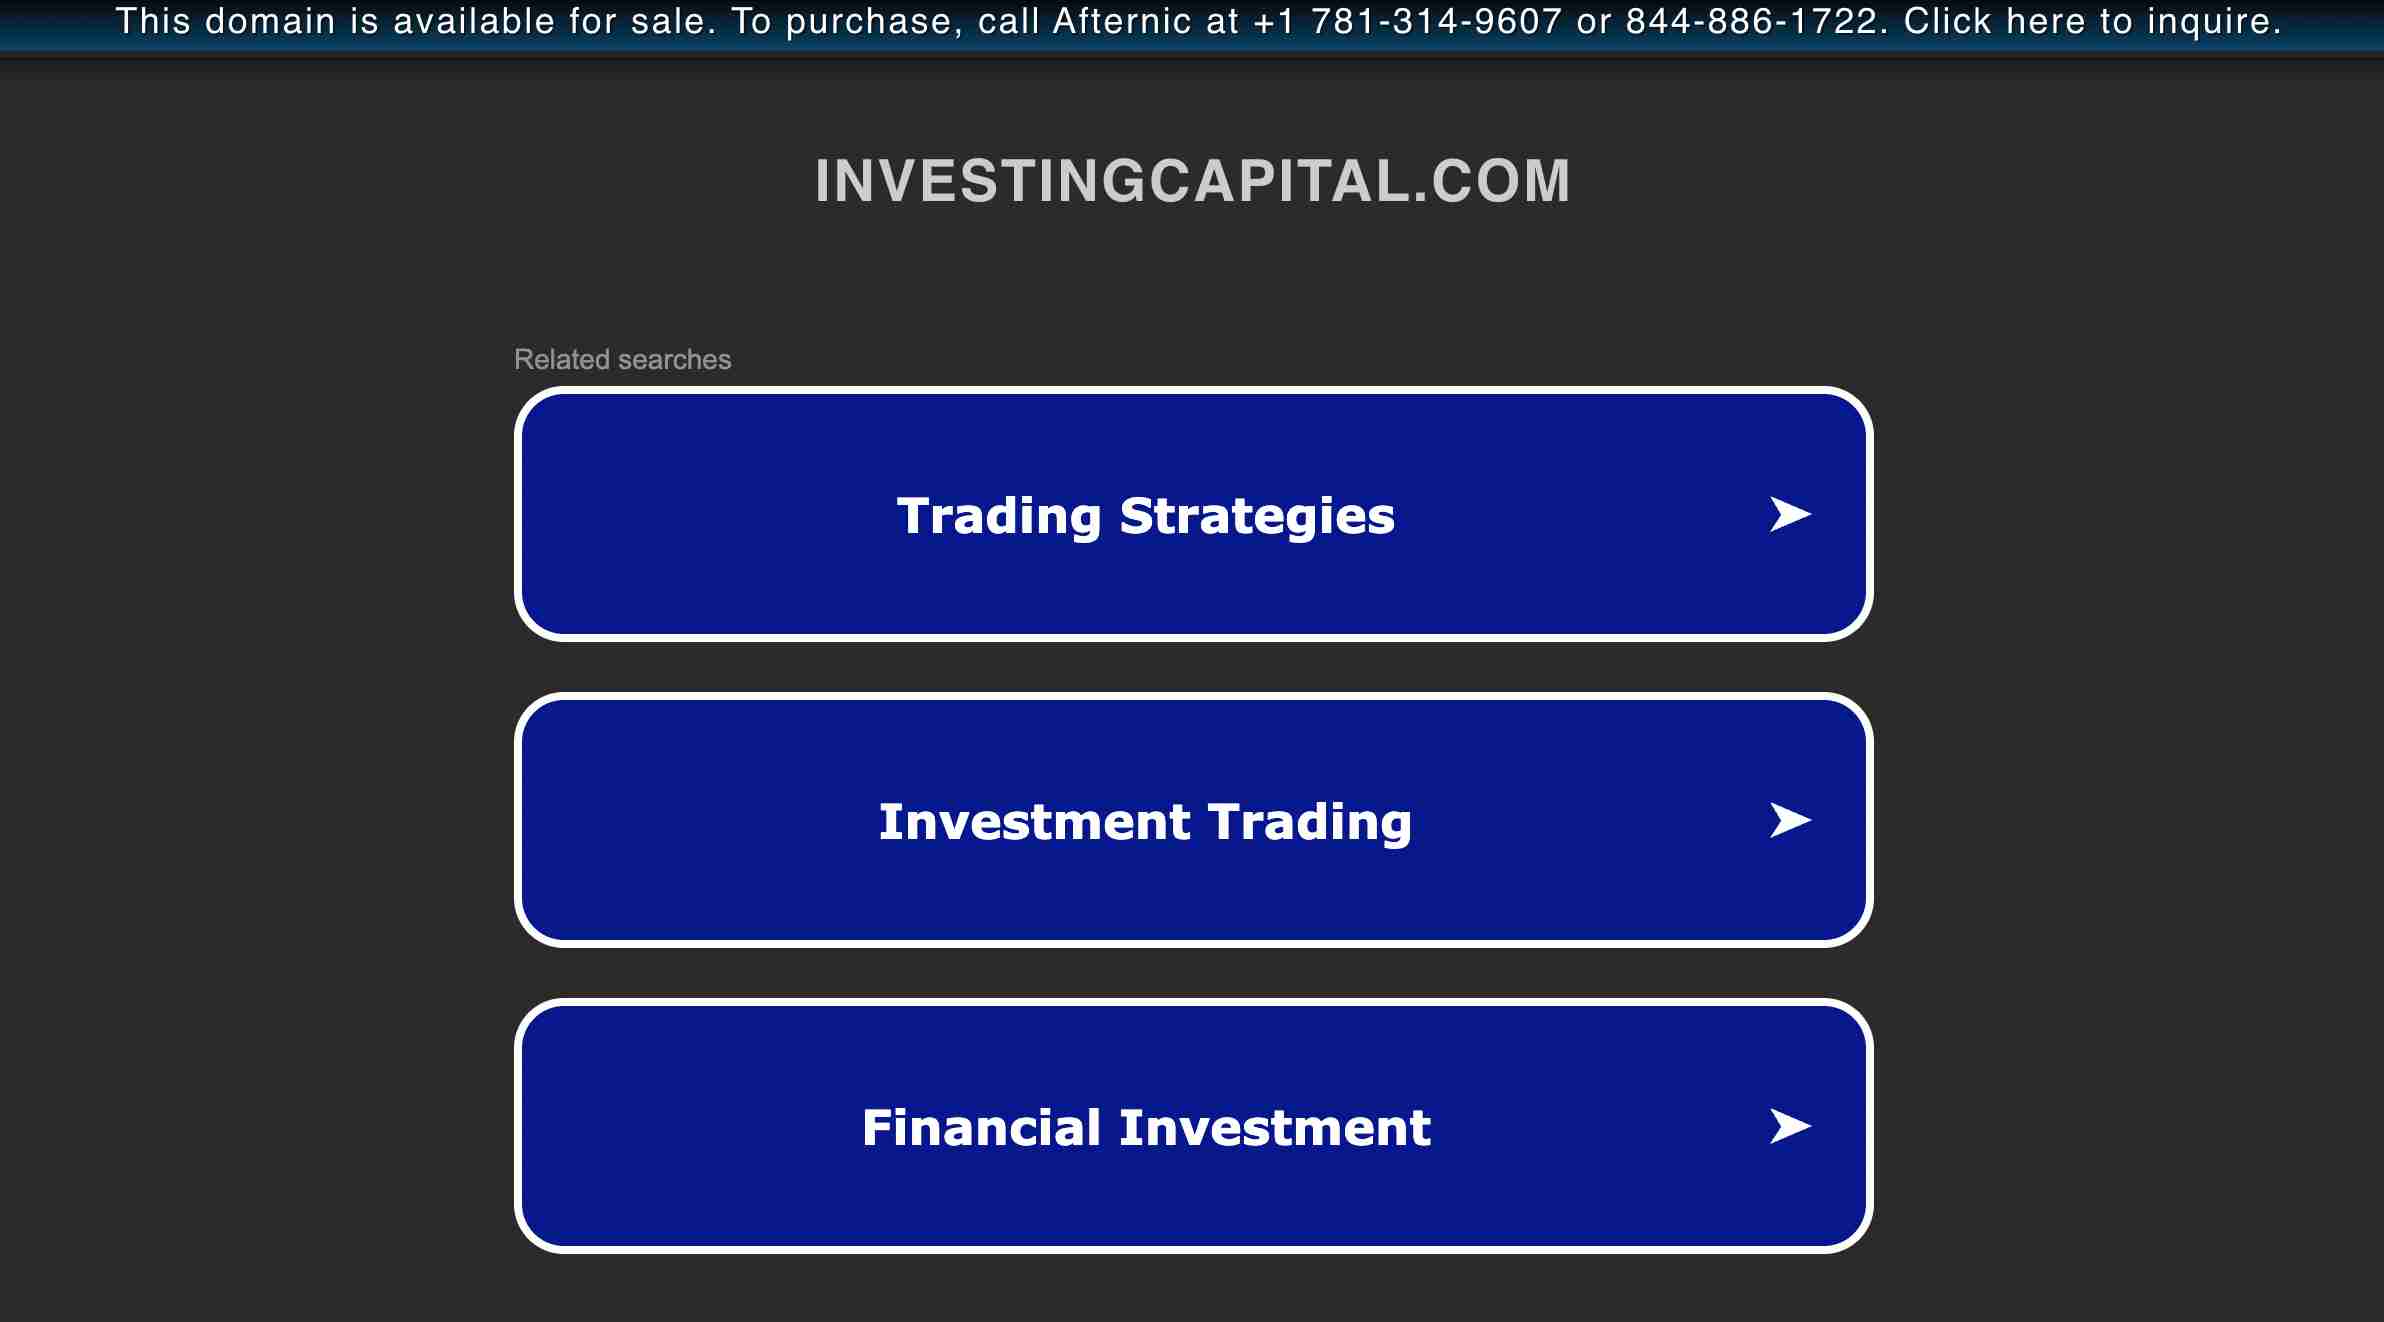 Investing Capital